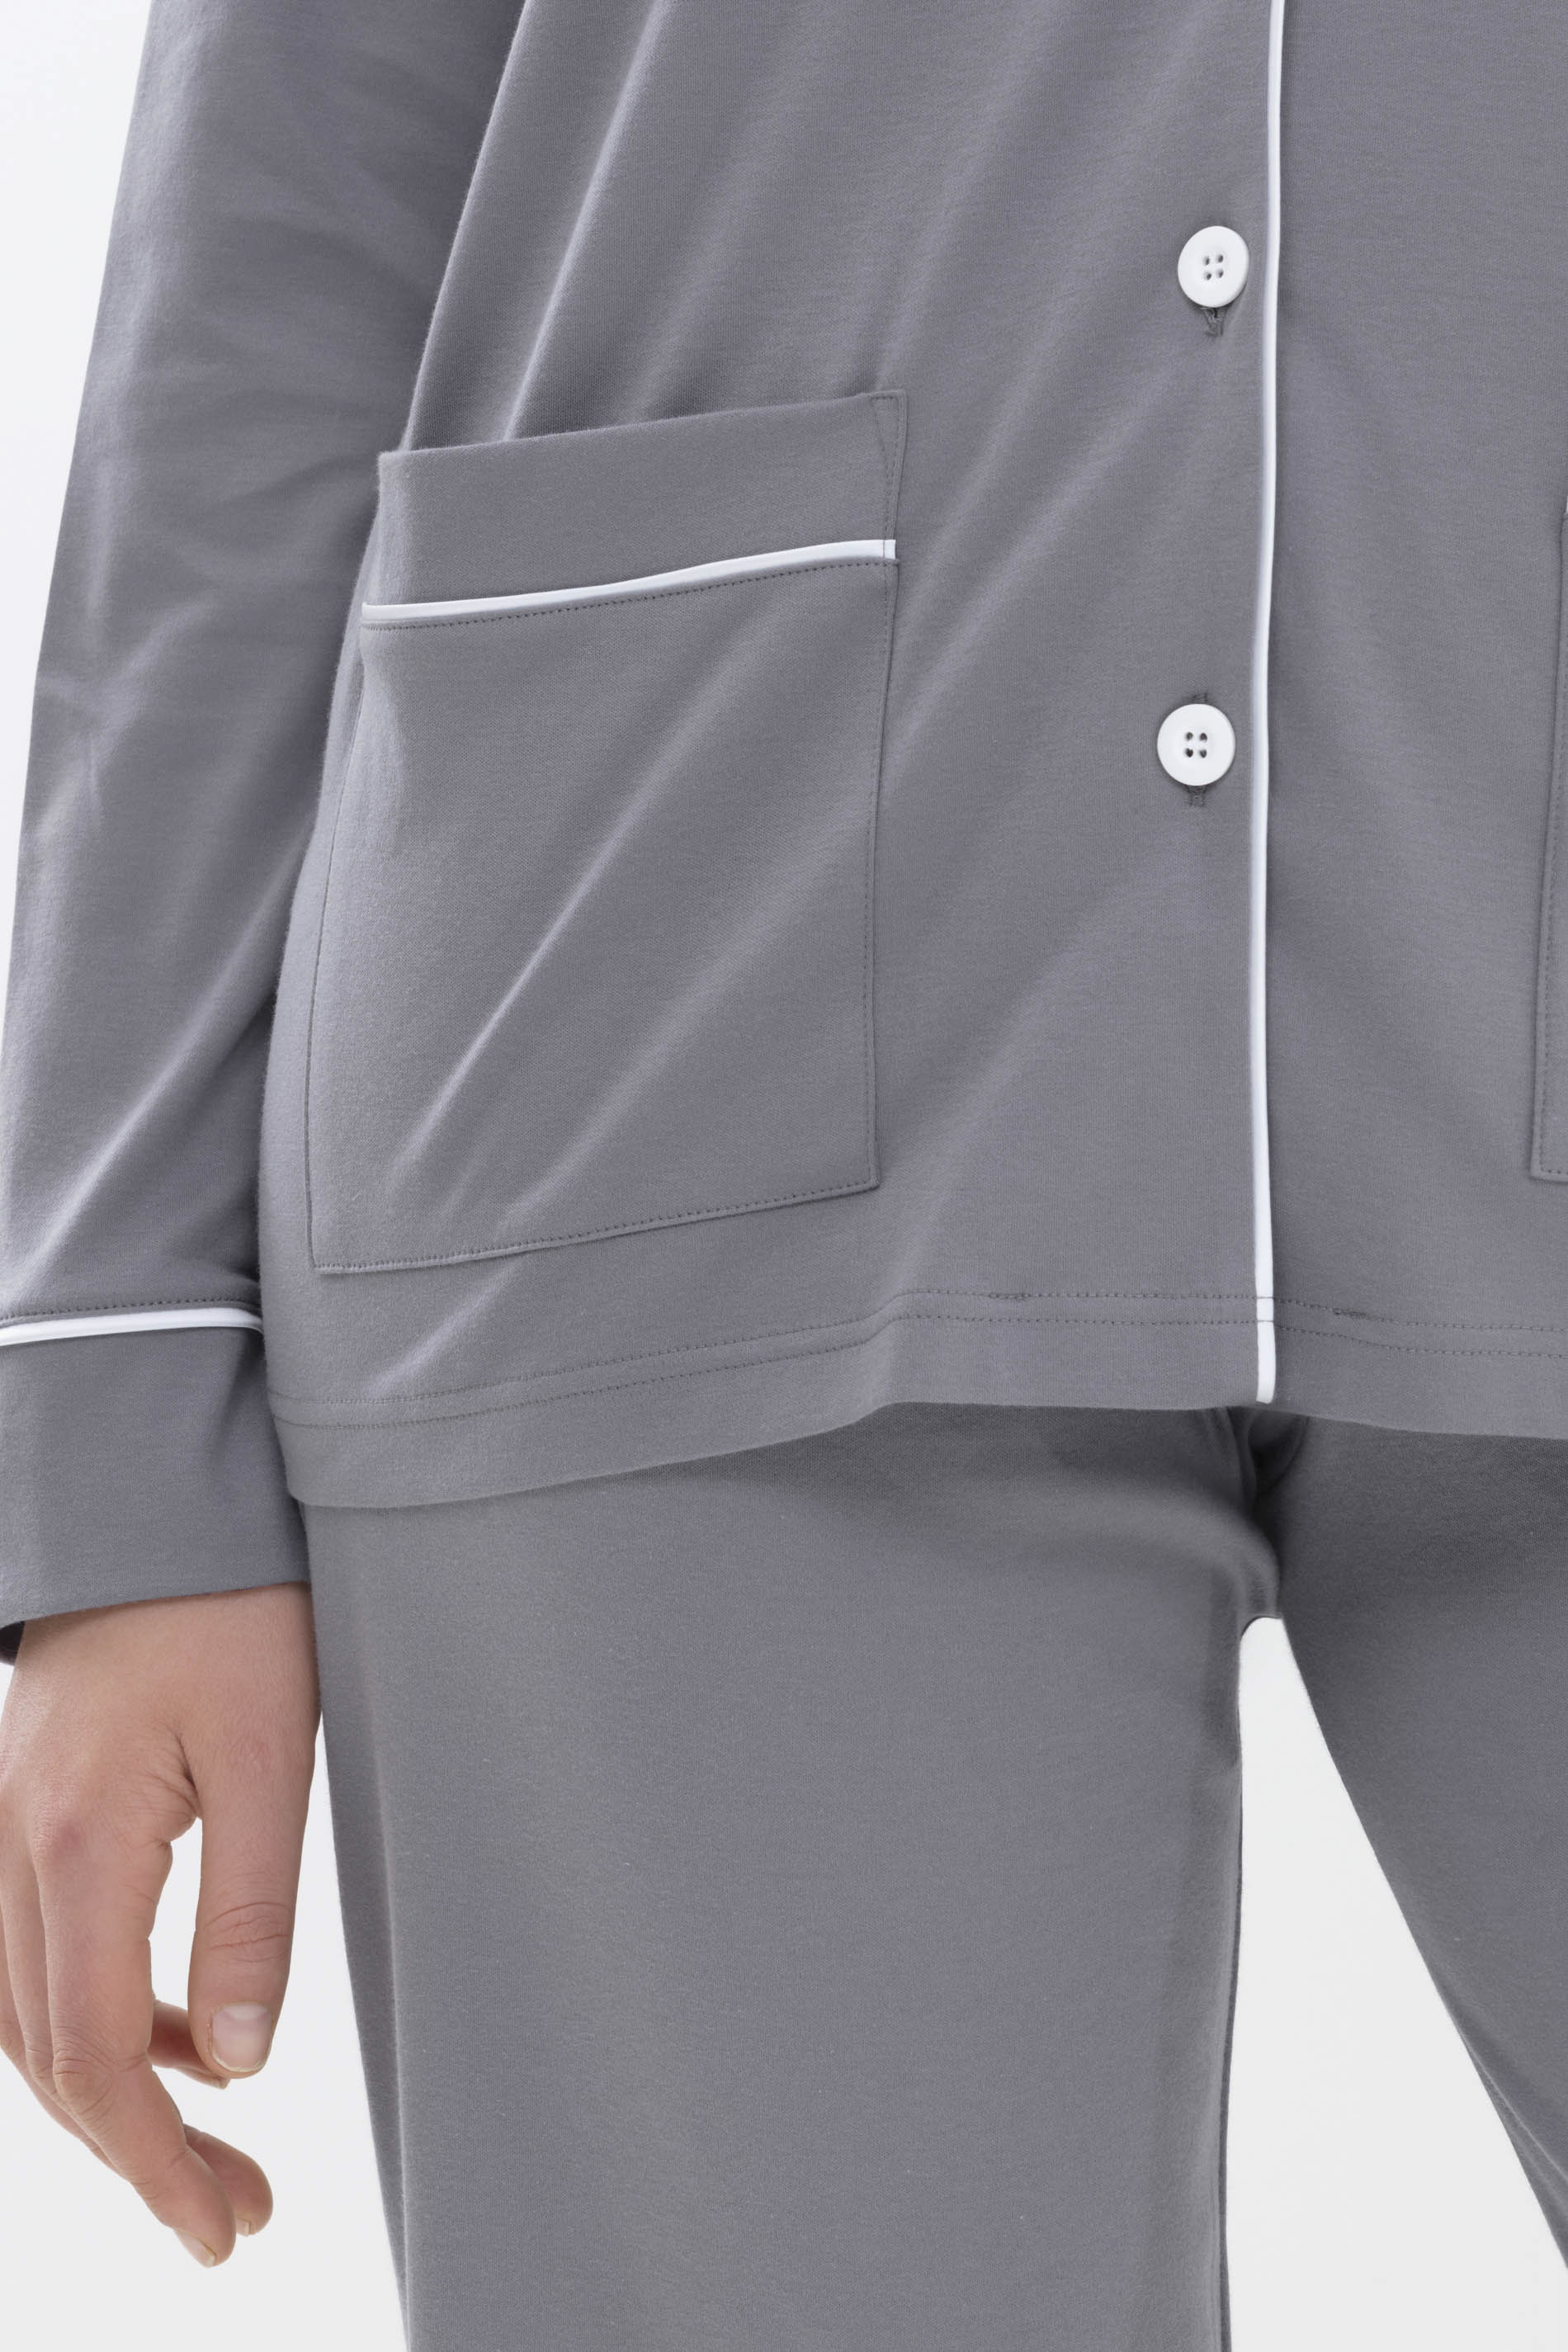 Pyjama-Shirt Lovely Grey Serie Sleepsation Detailansicht 02 | mey®